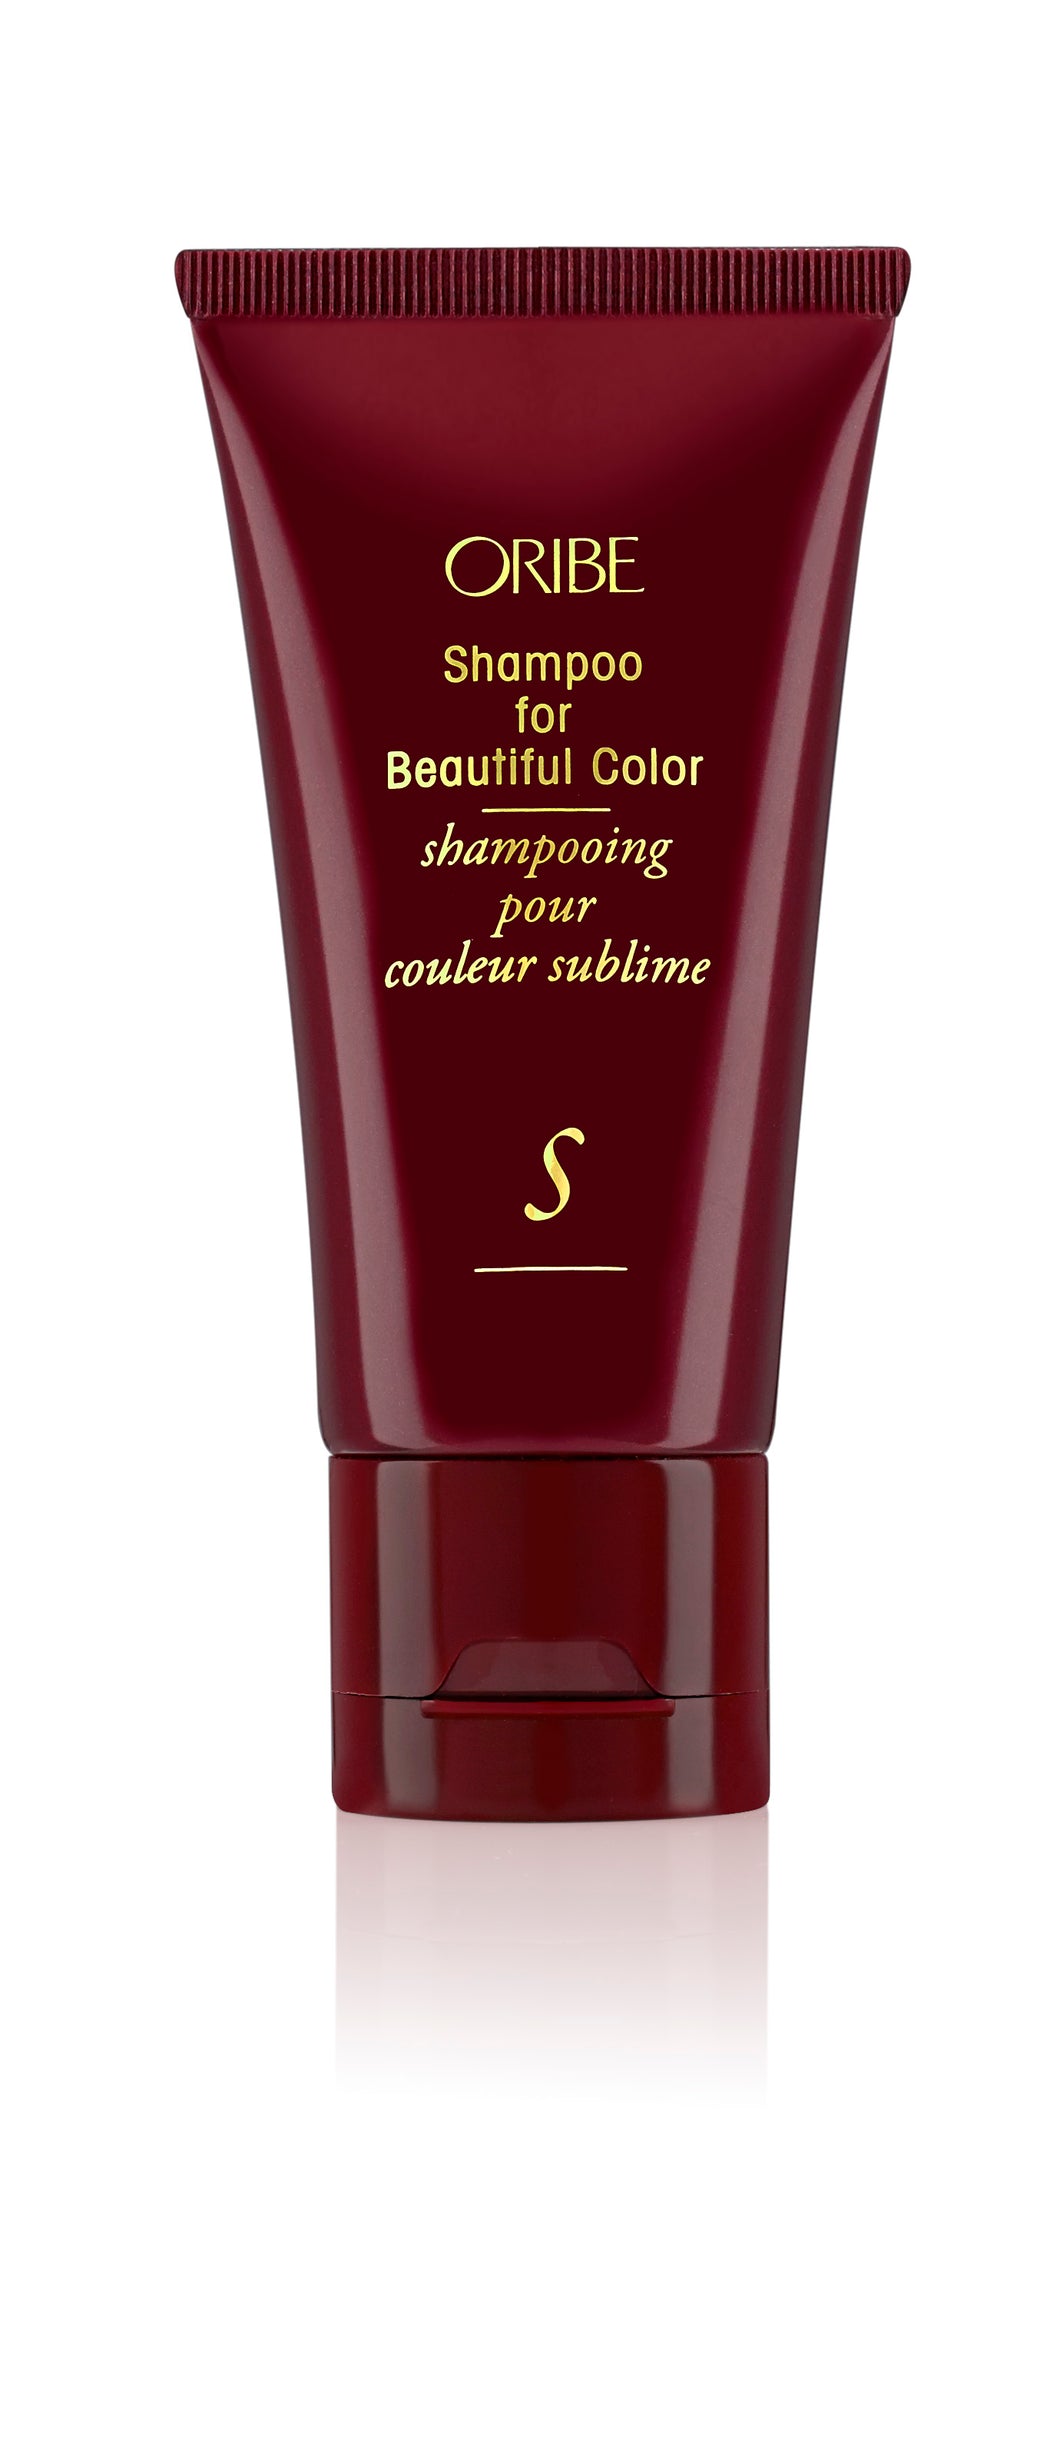 Shampoo for Beautiful Color